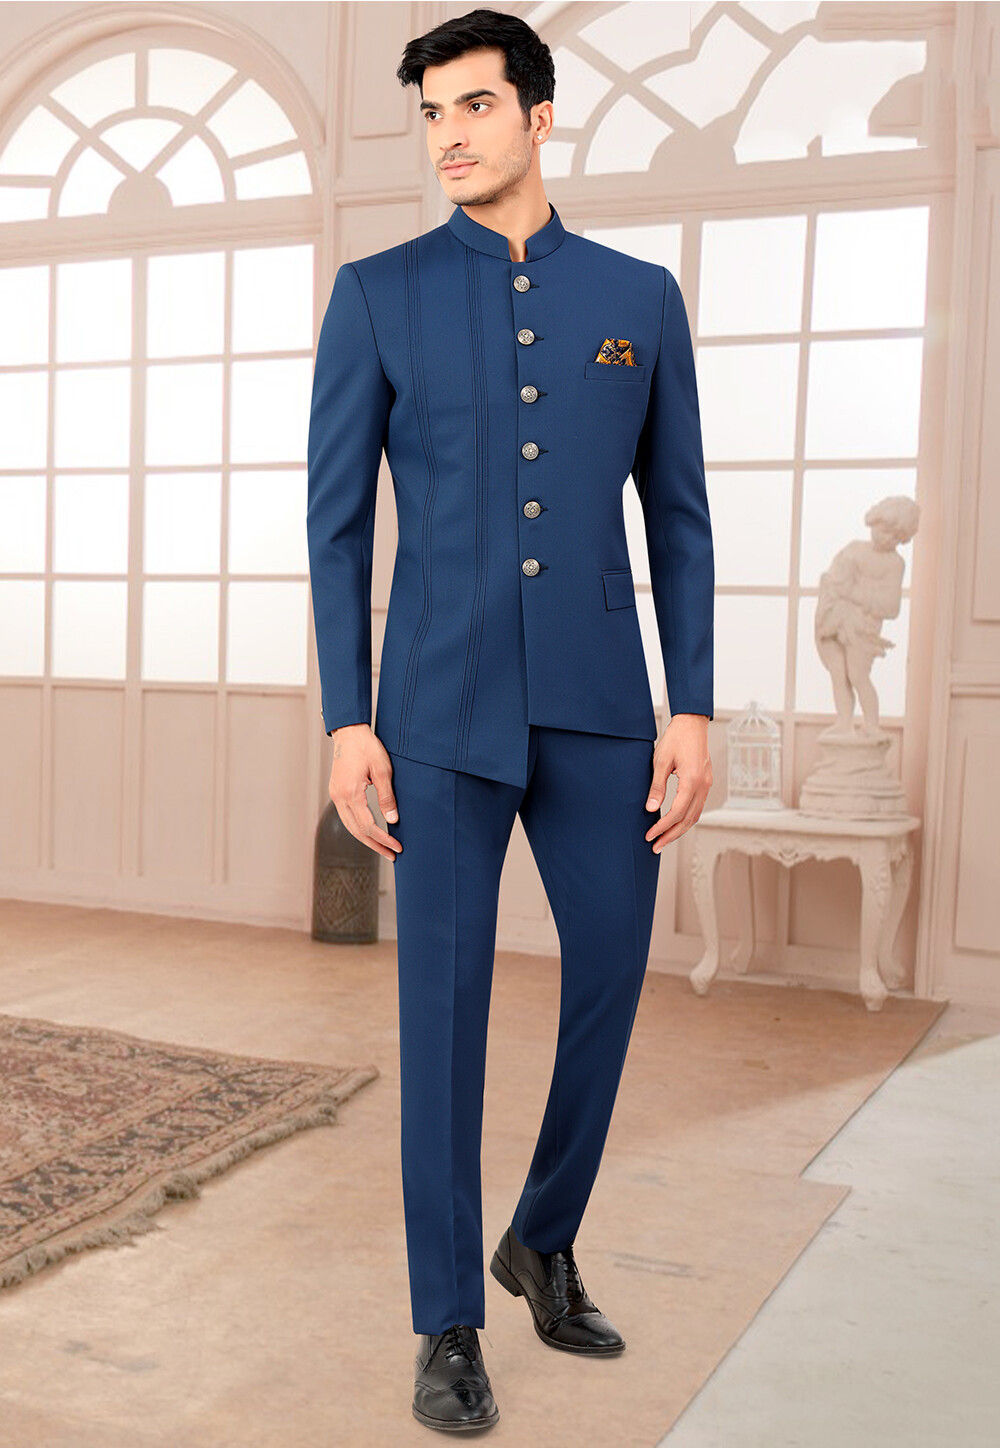 Ethinic Wear Full Sleeves Jodhpuri Suit For Mens at Best Price in Jaipur |  Ankit Fashions